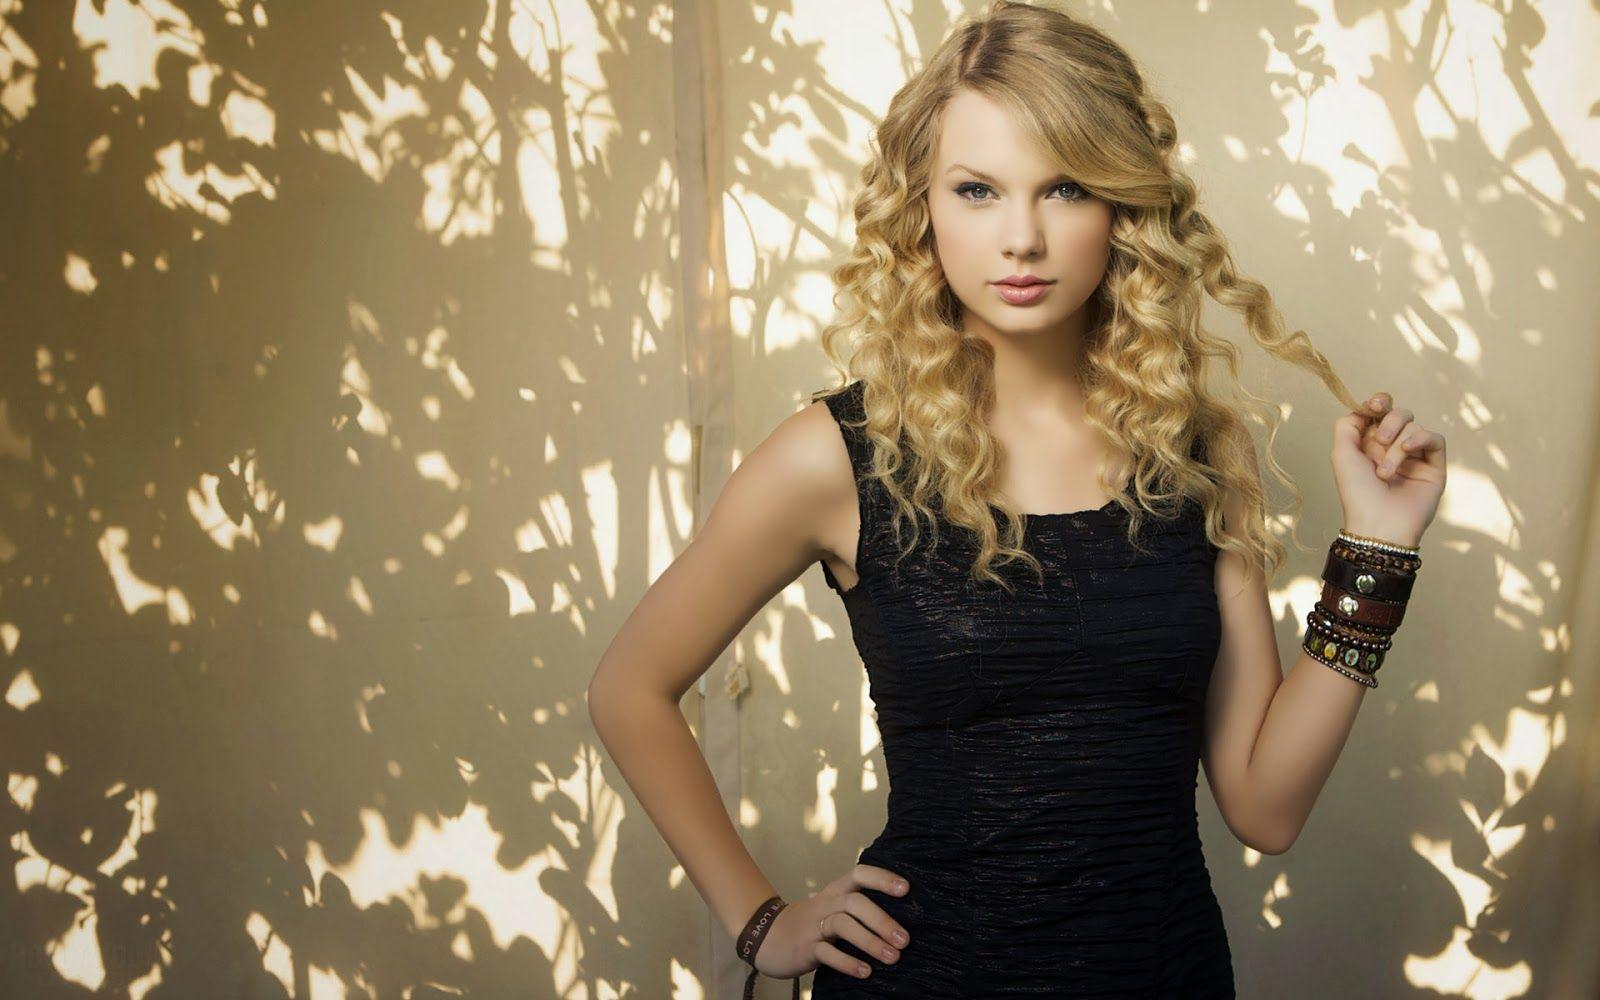 Picture: Taylor Swift HD Wallpaper. Taylor Swift